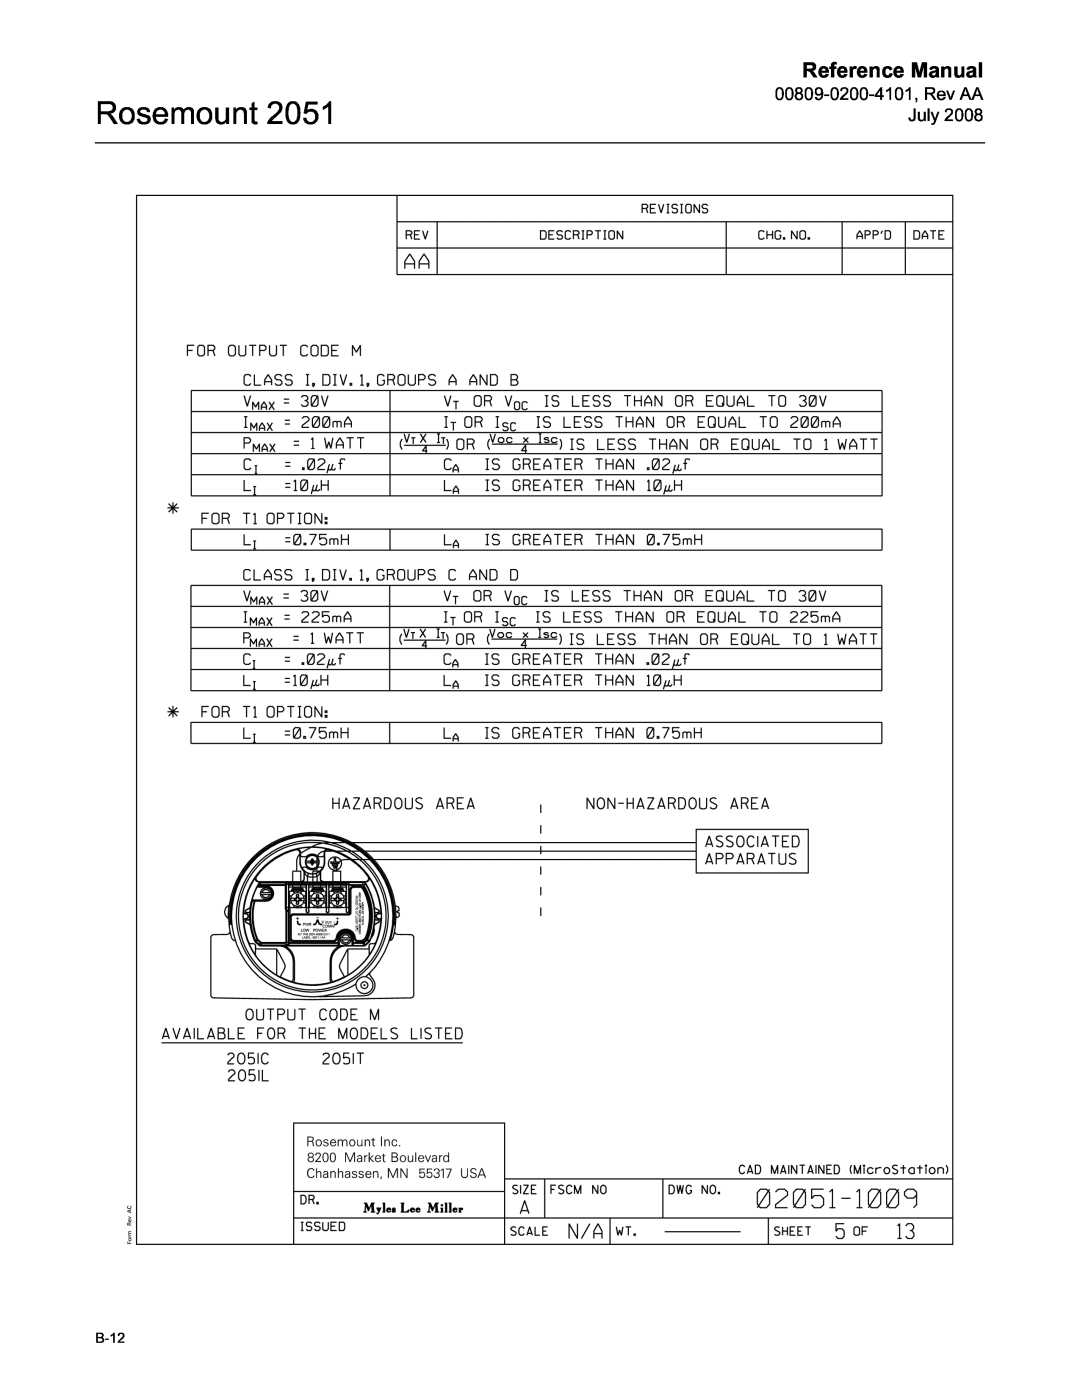 Emerson Process Management 2051 manual Rosemount, Reference Manual, B-12 